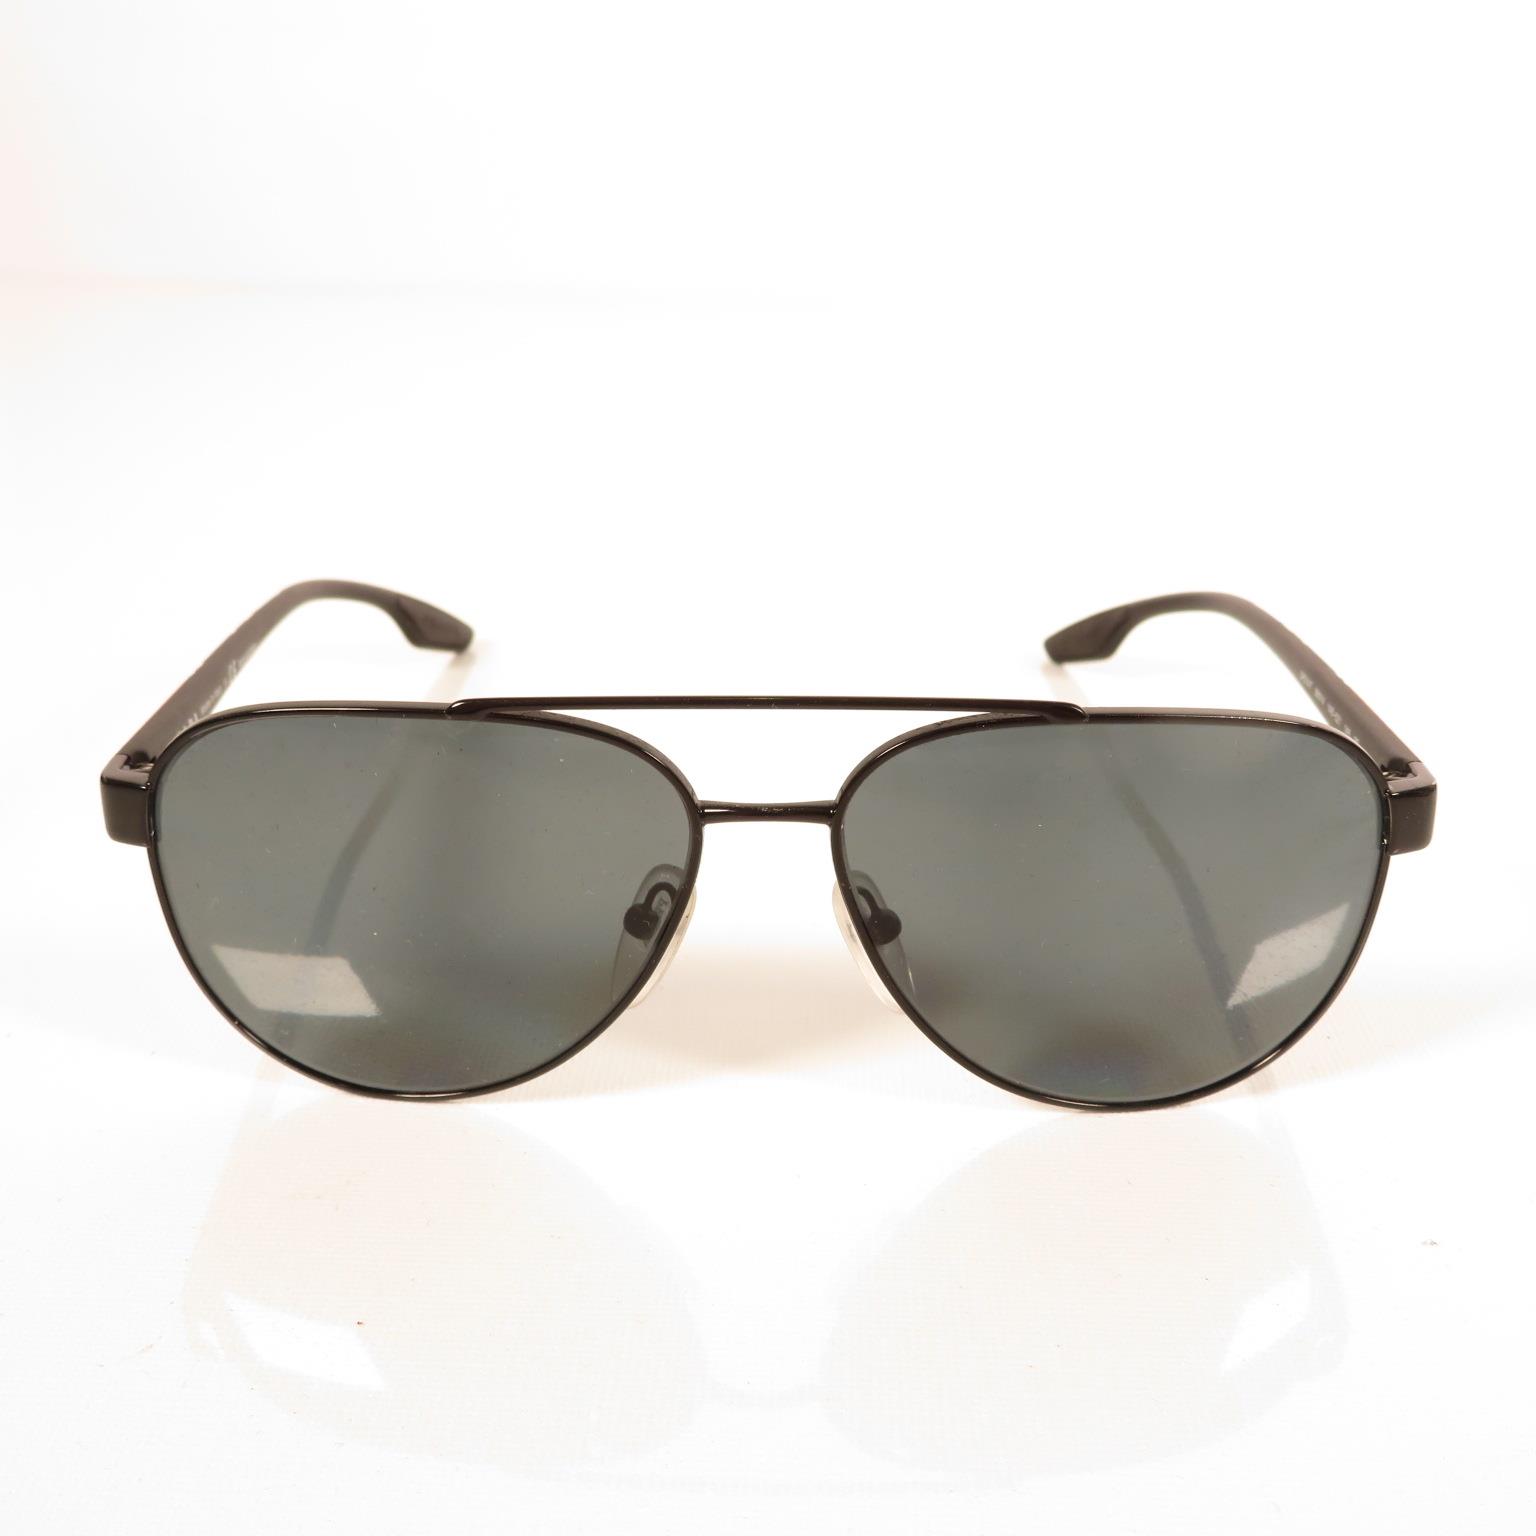 5x sets of Ray Ban sunglasses - - Image 7 of 23